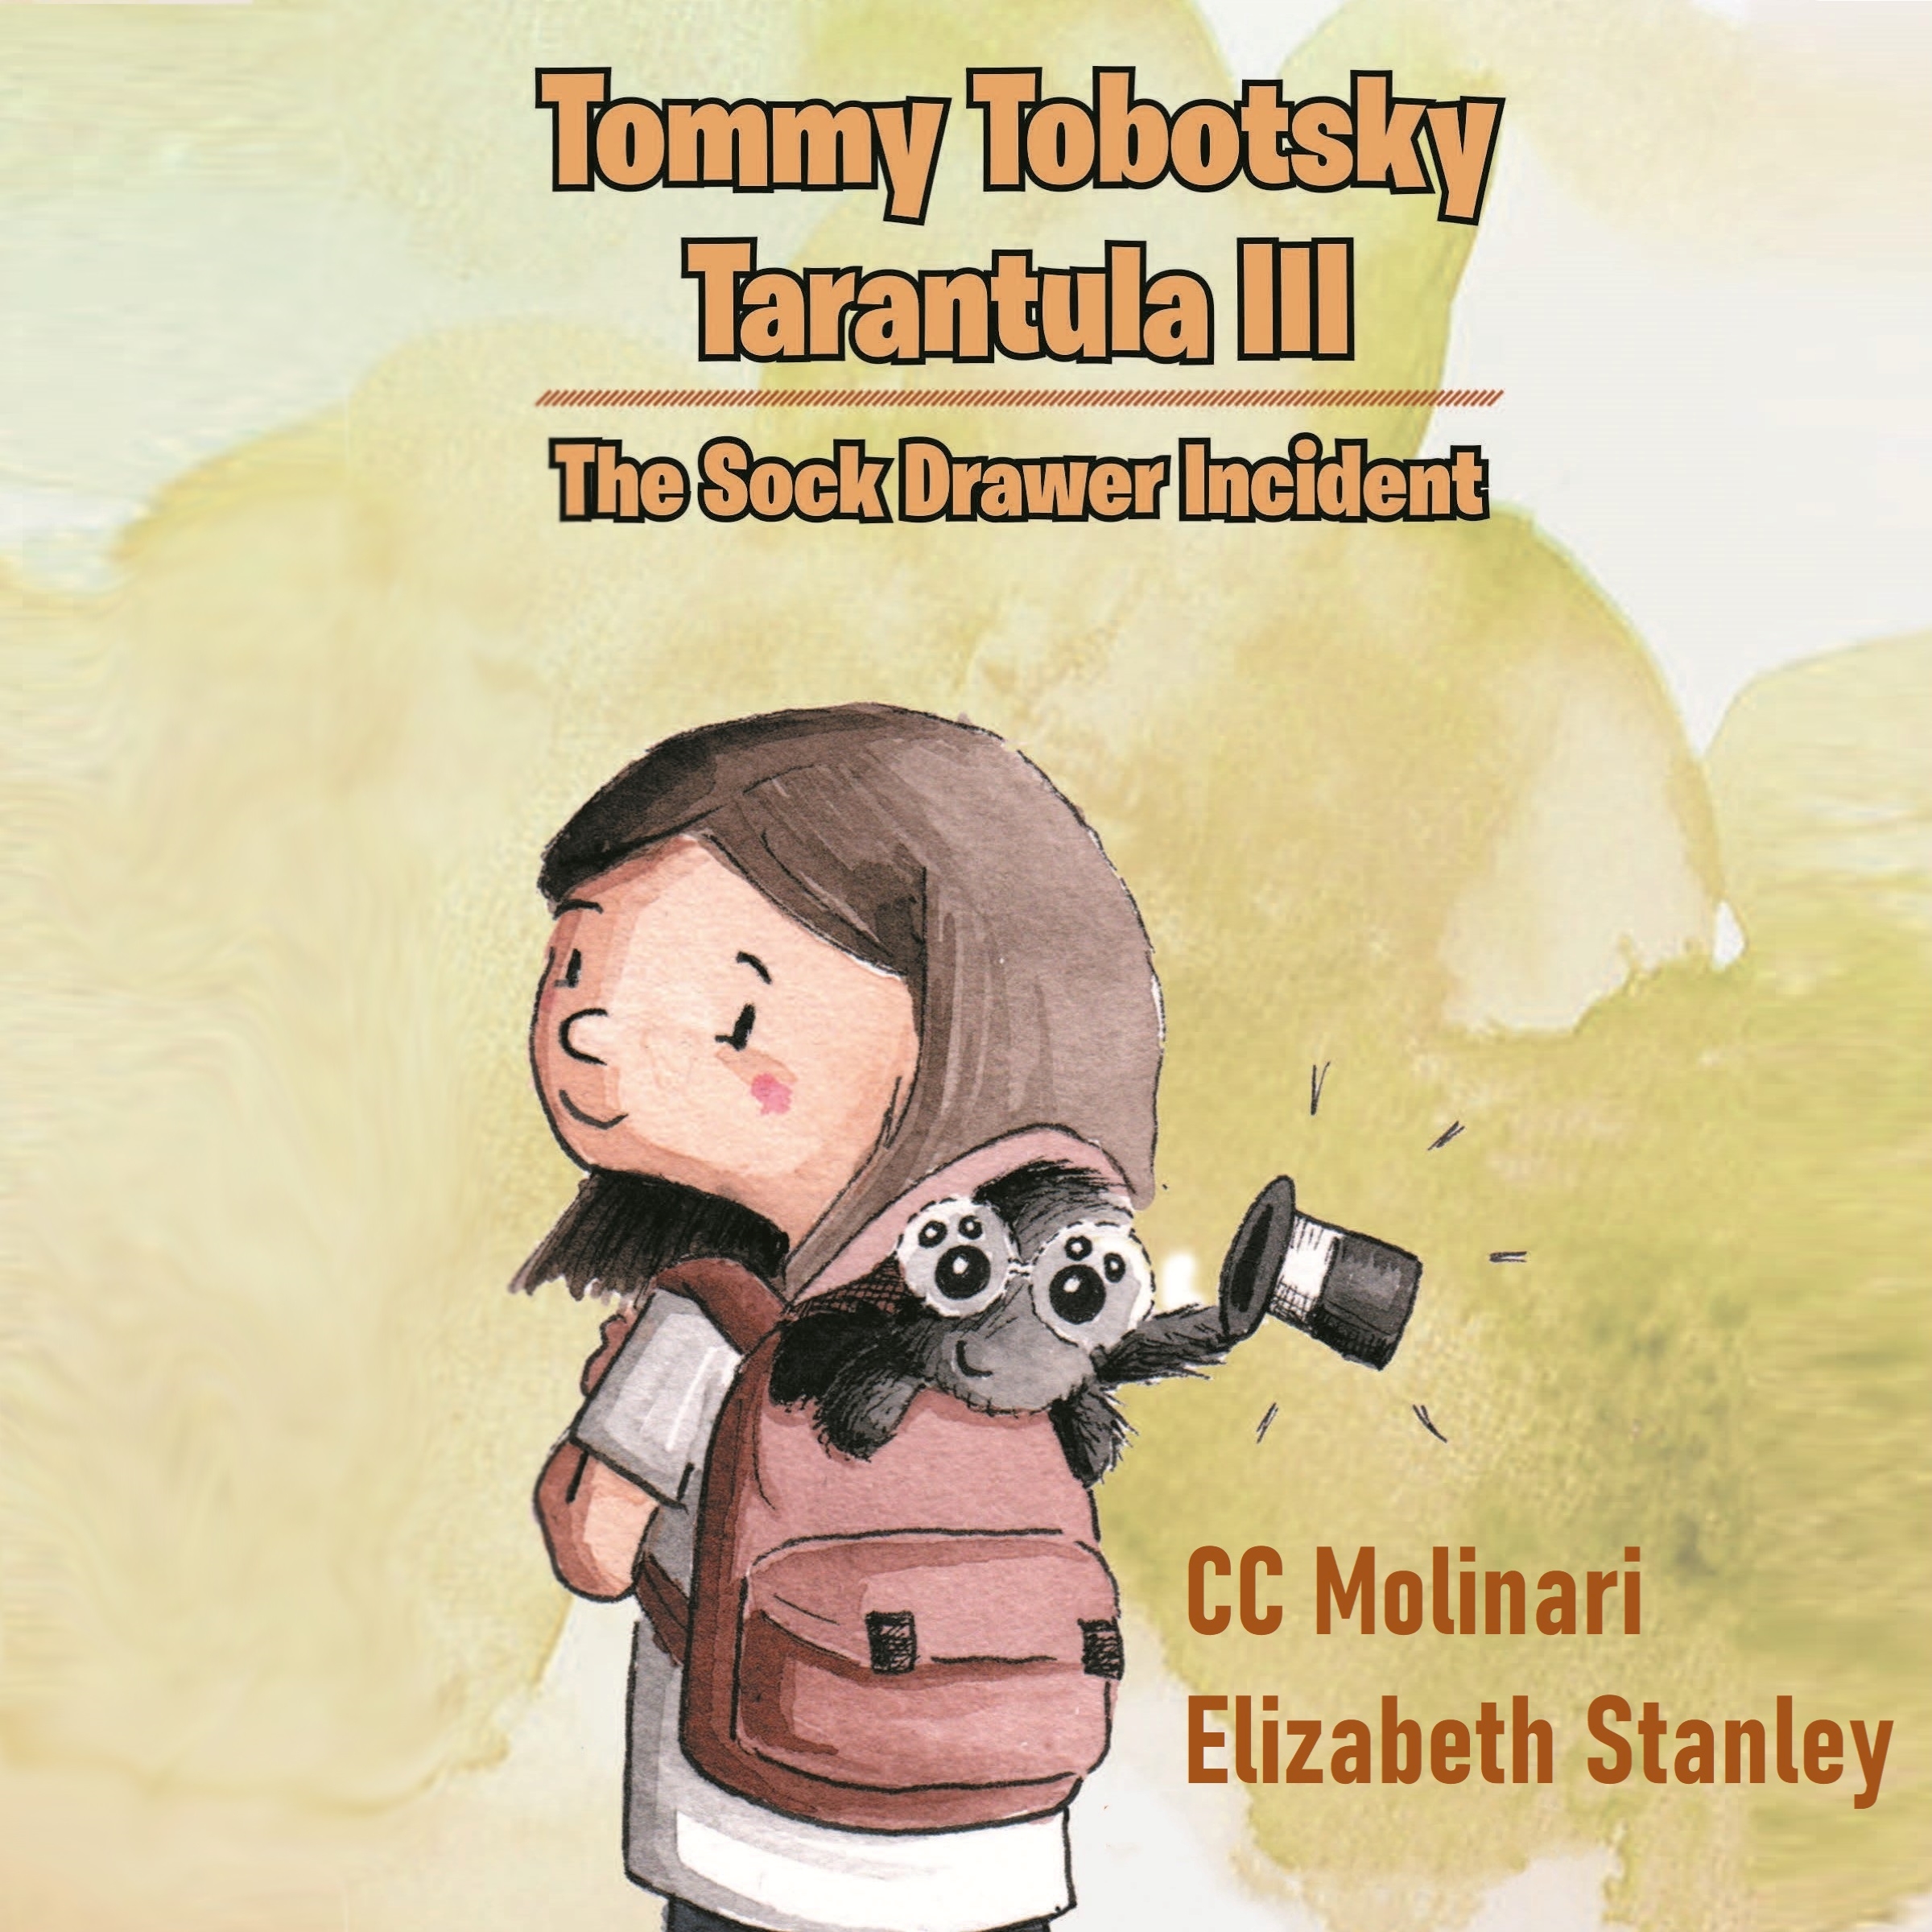 image for Tommy Tobosky Tarantula III